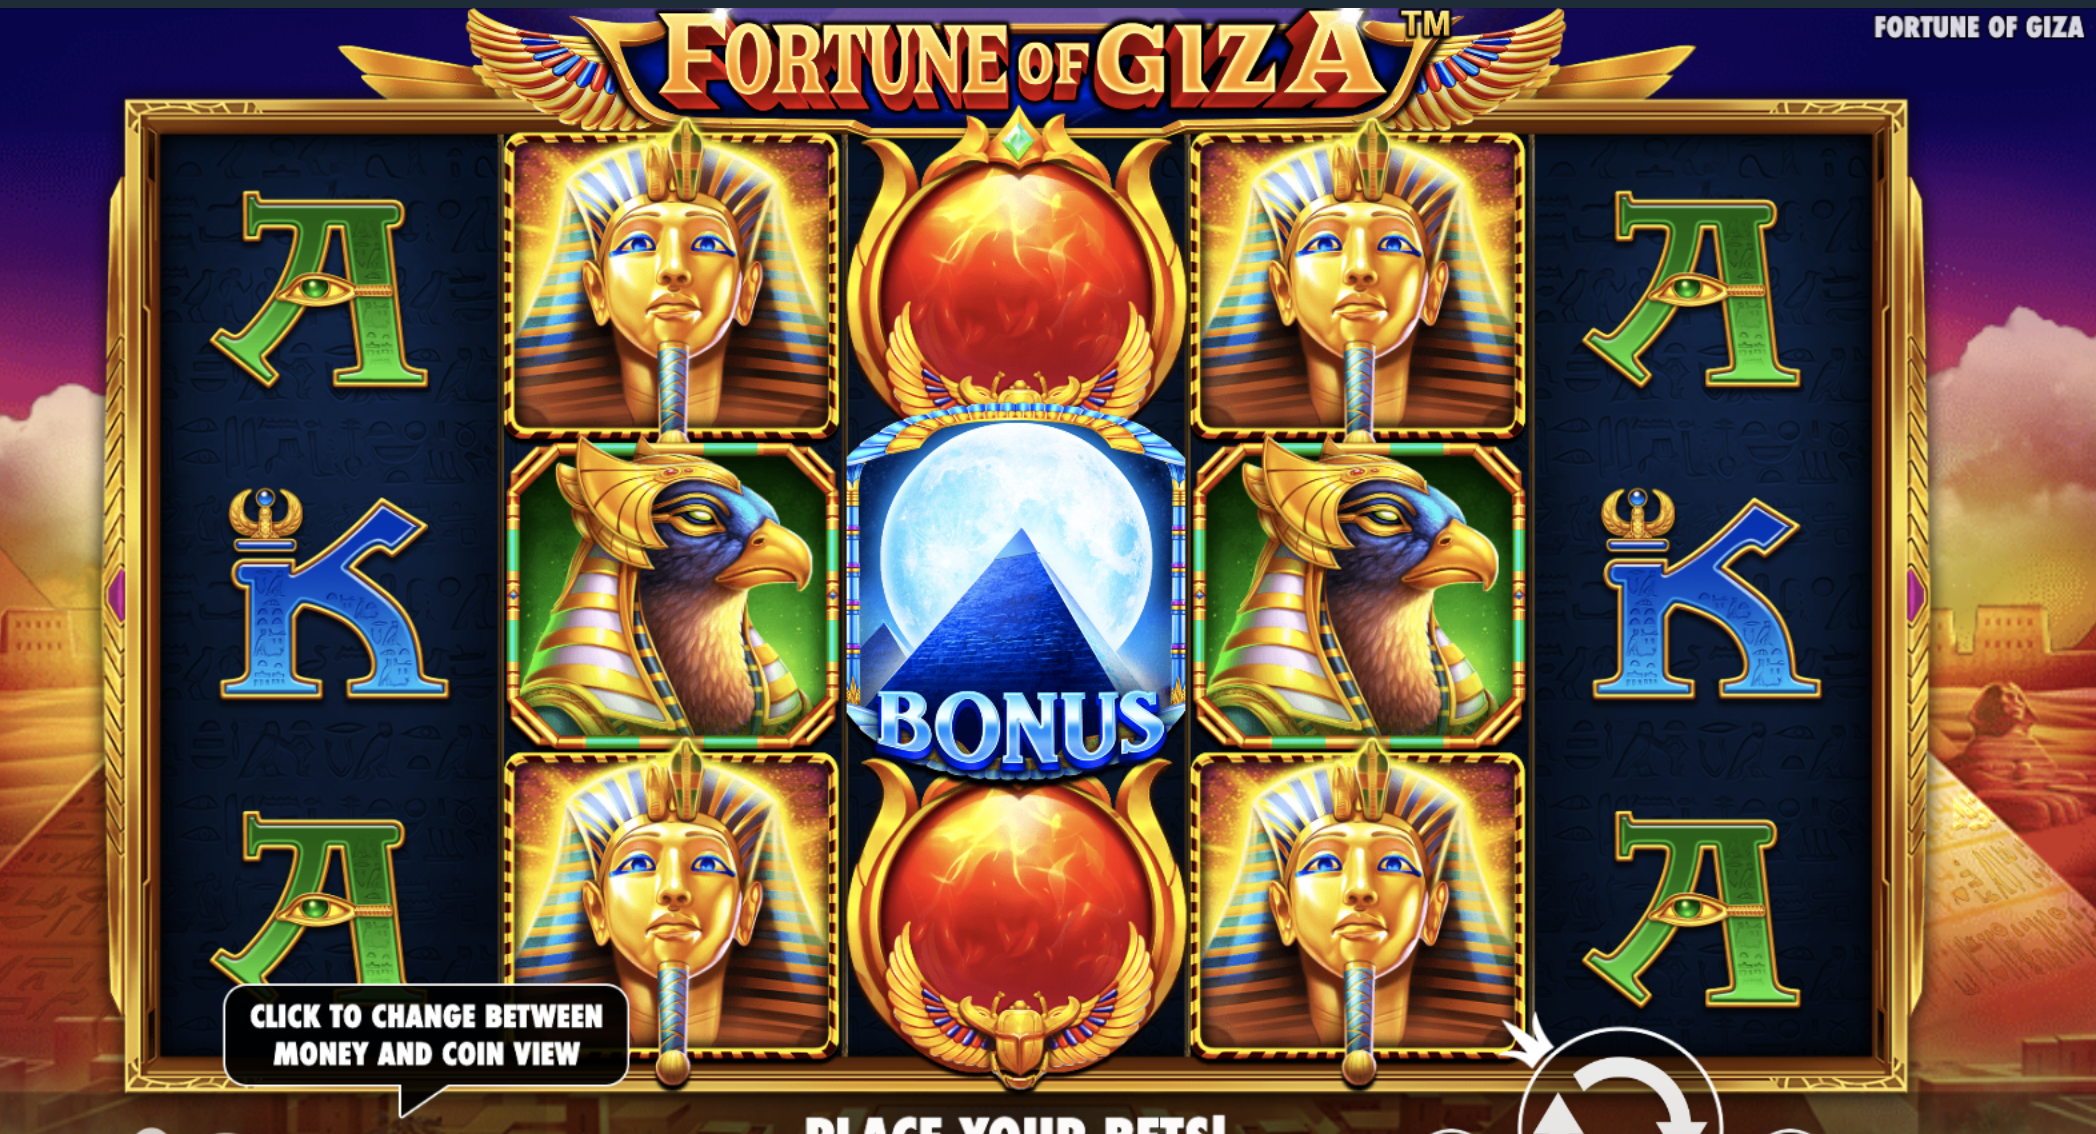 Fortune of giza